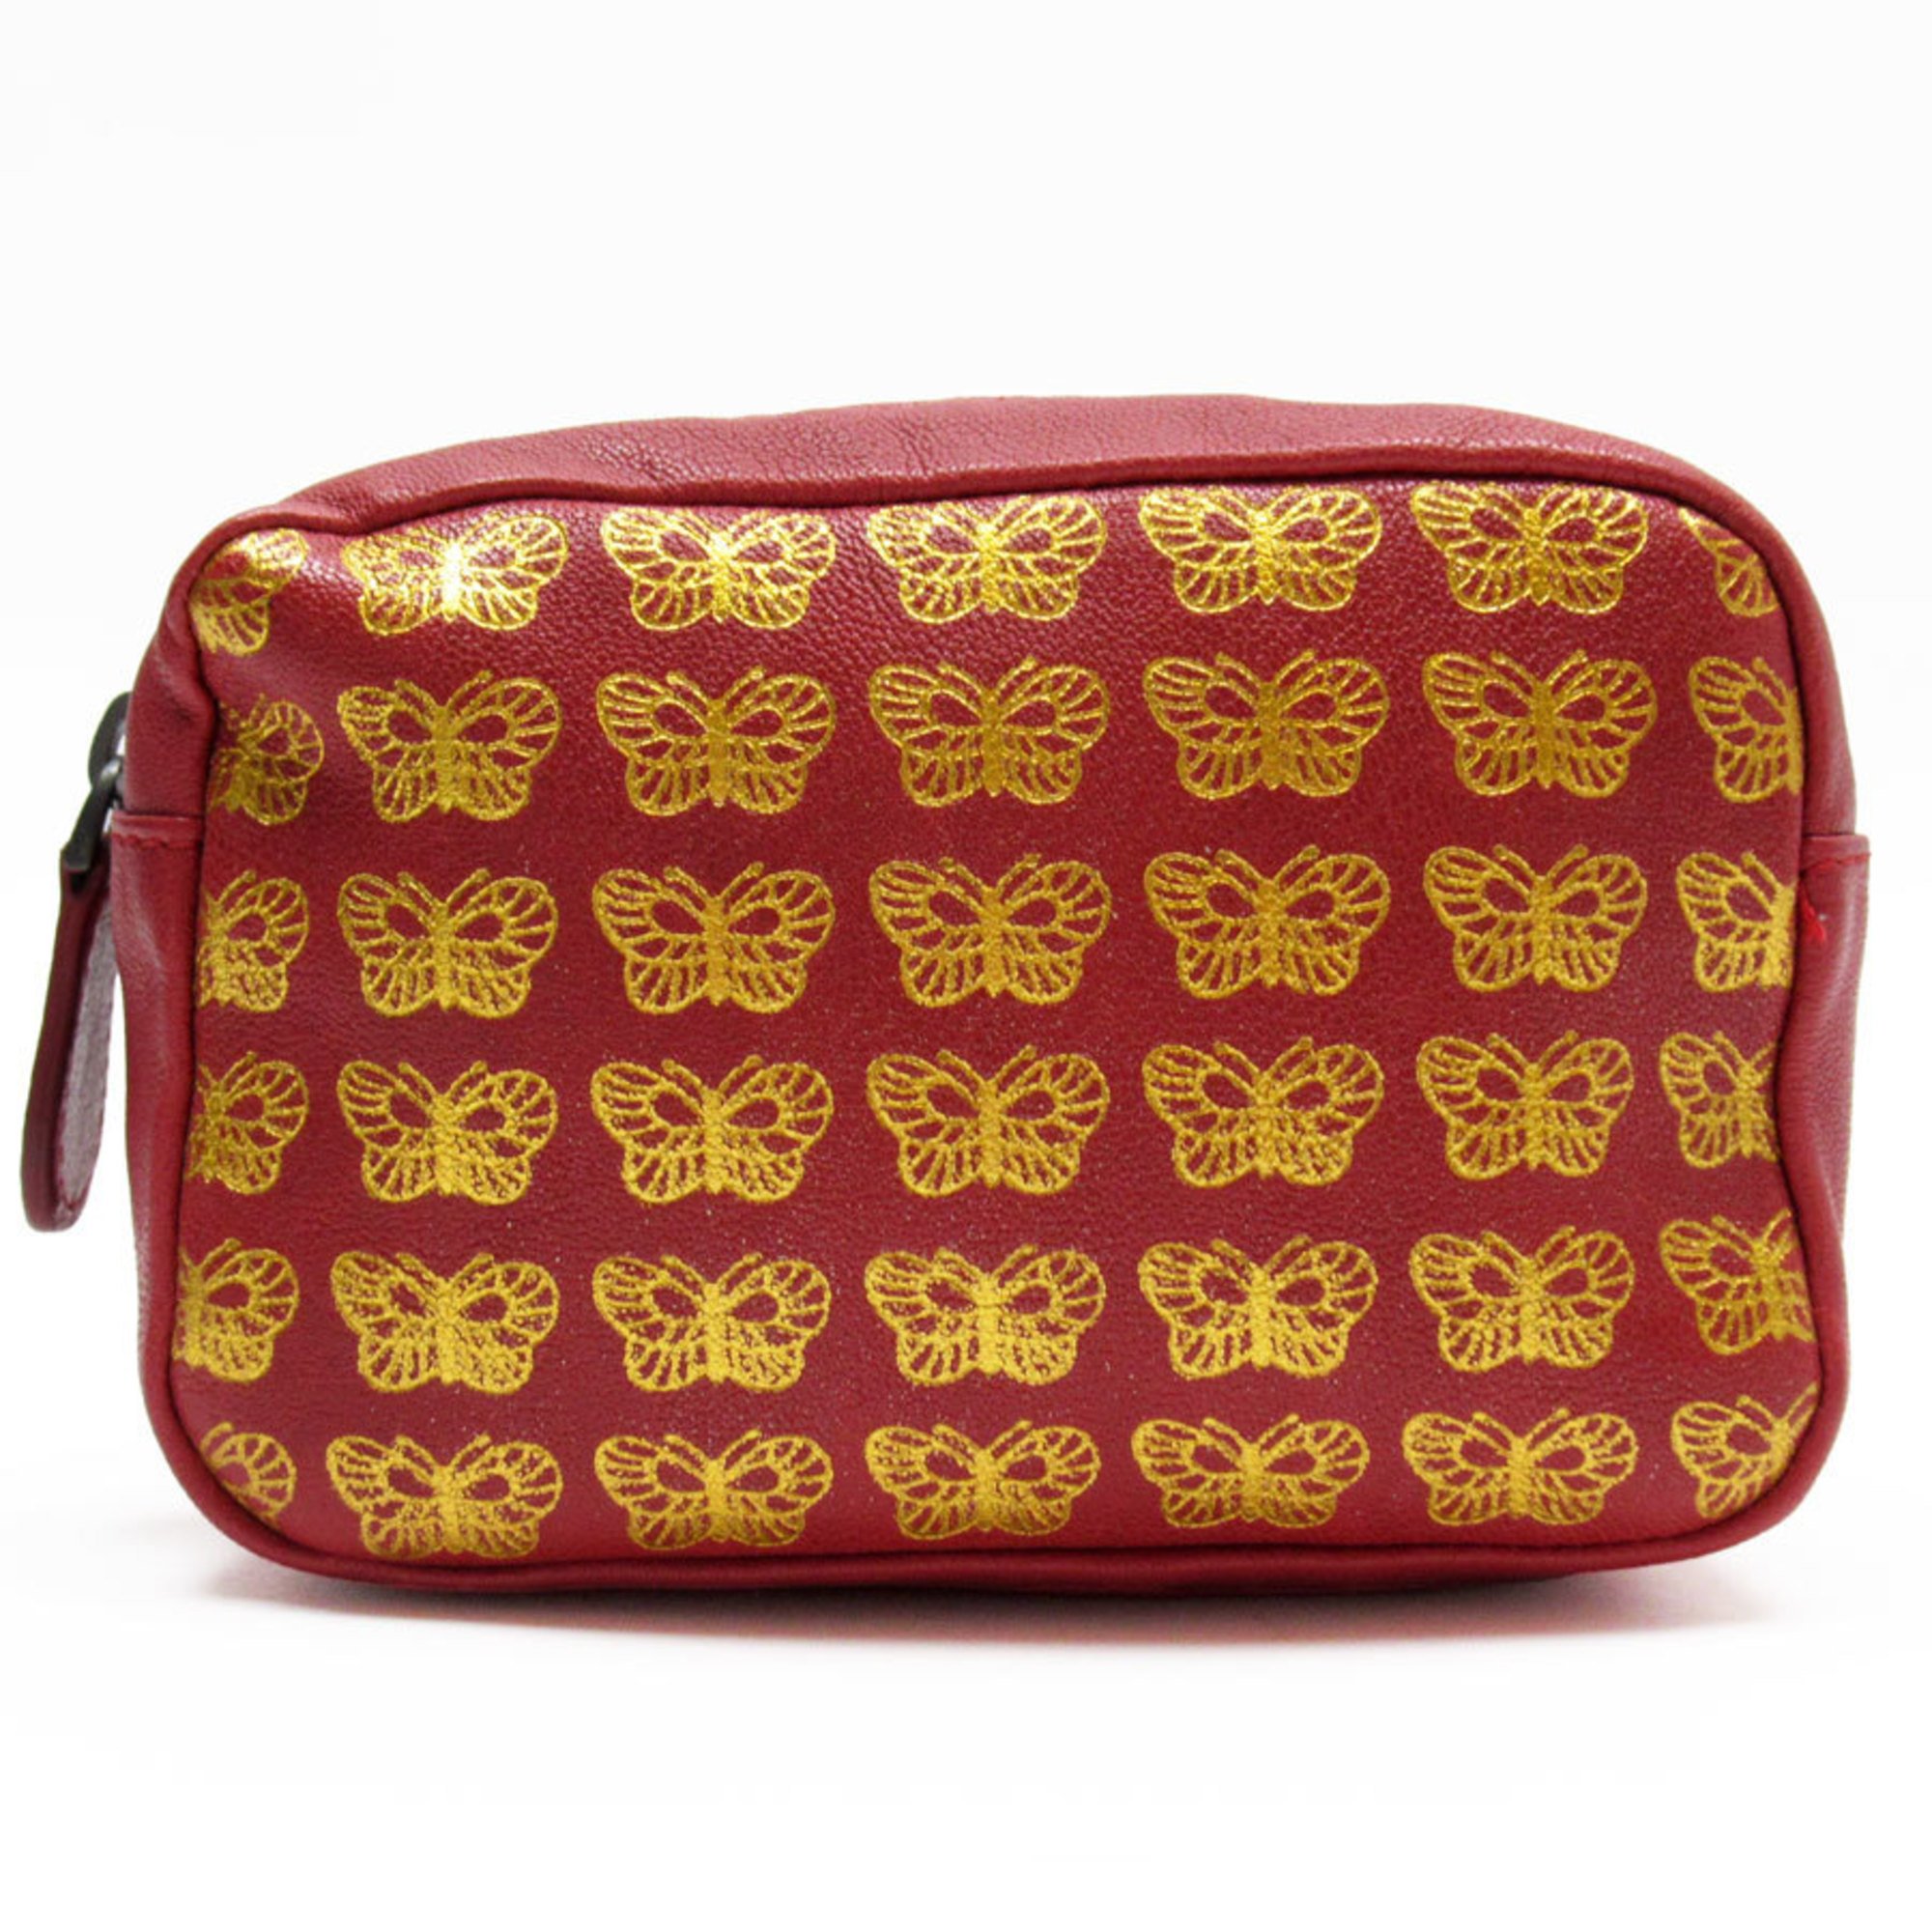 PRADA Pouch Multi-Case Butterfly Leather Dark Red Gold Women's w0519a